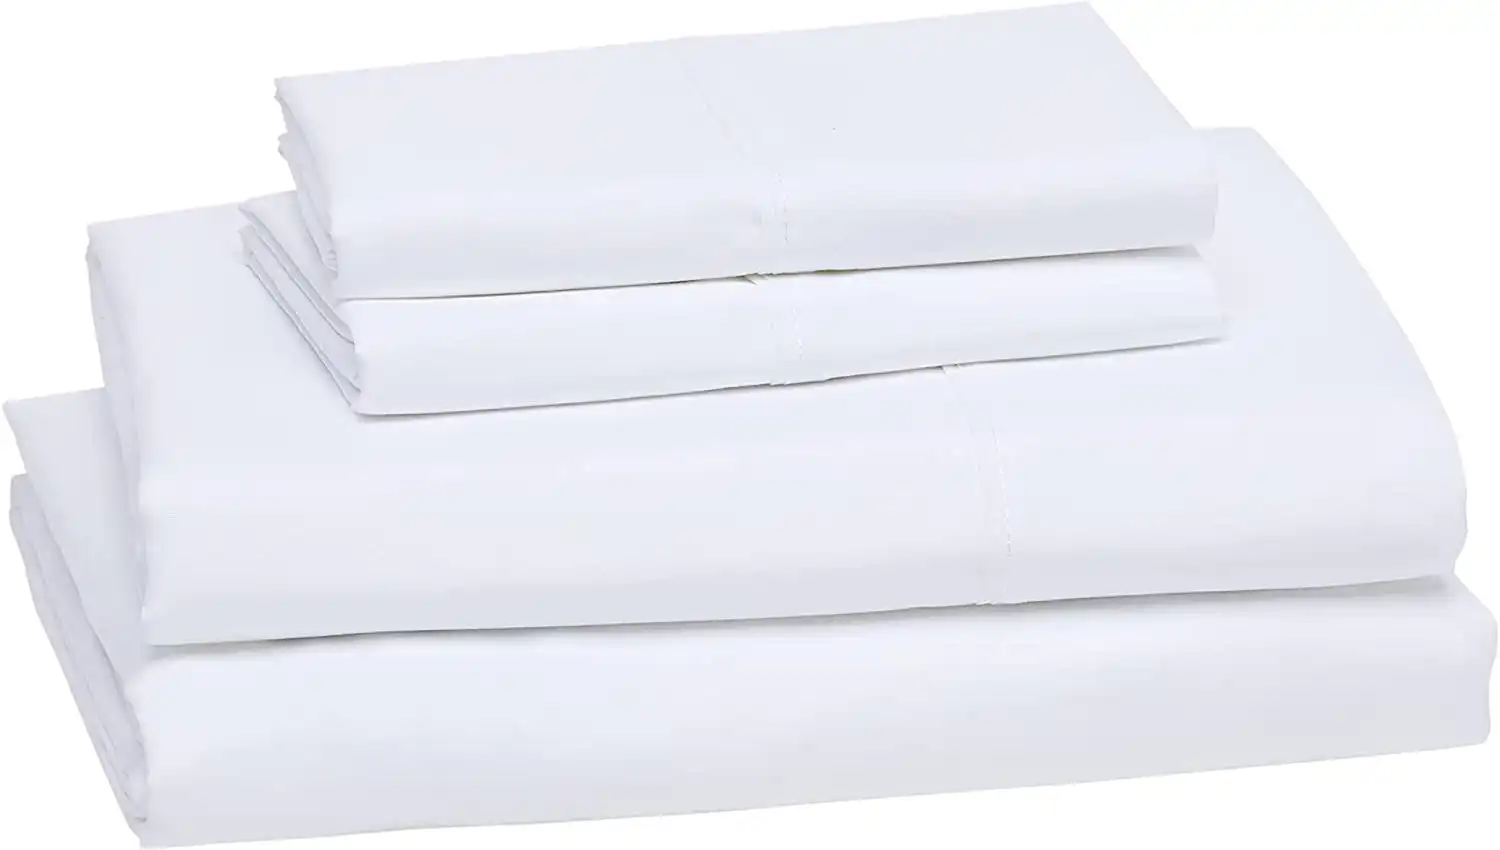 King Size Microfiber Bed Sheet Set, Lightweight, Super Soft, Easy Care, 36cm Deep Pockets, Bright White